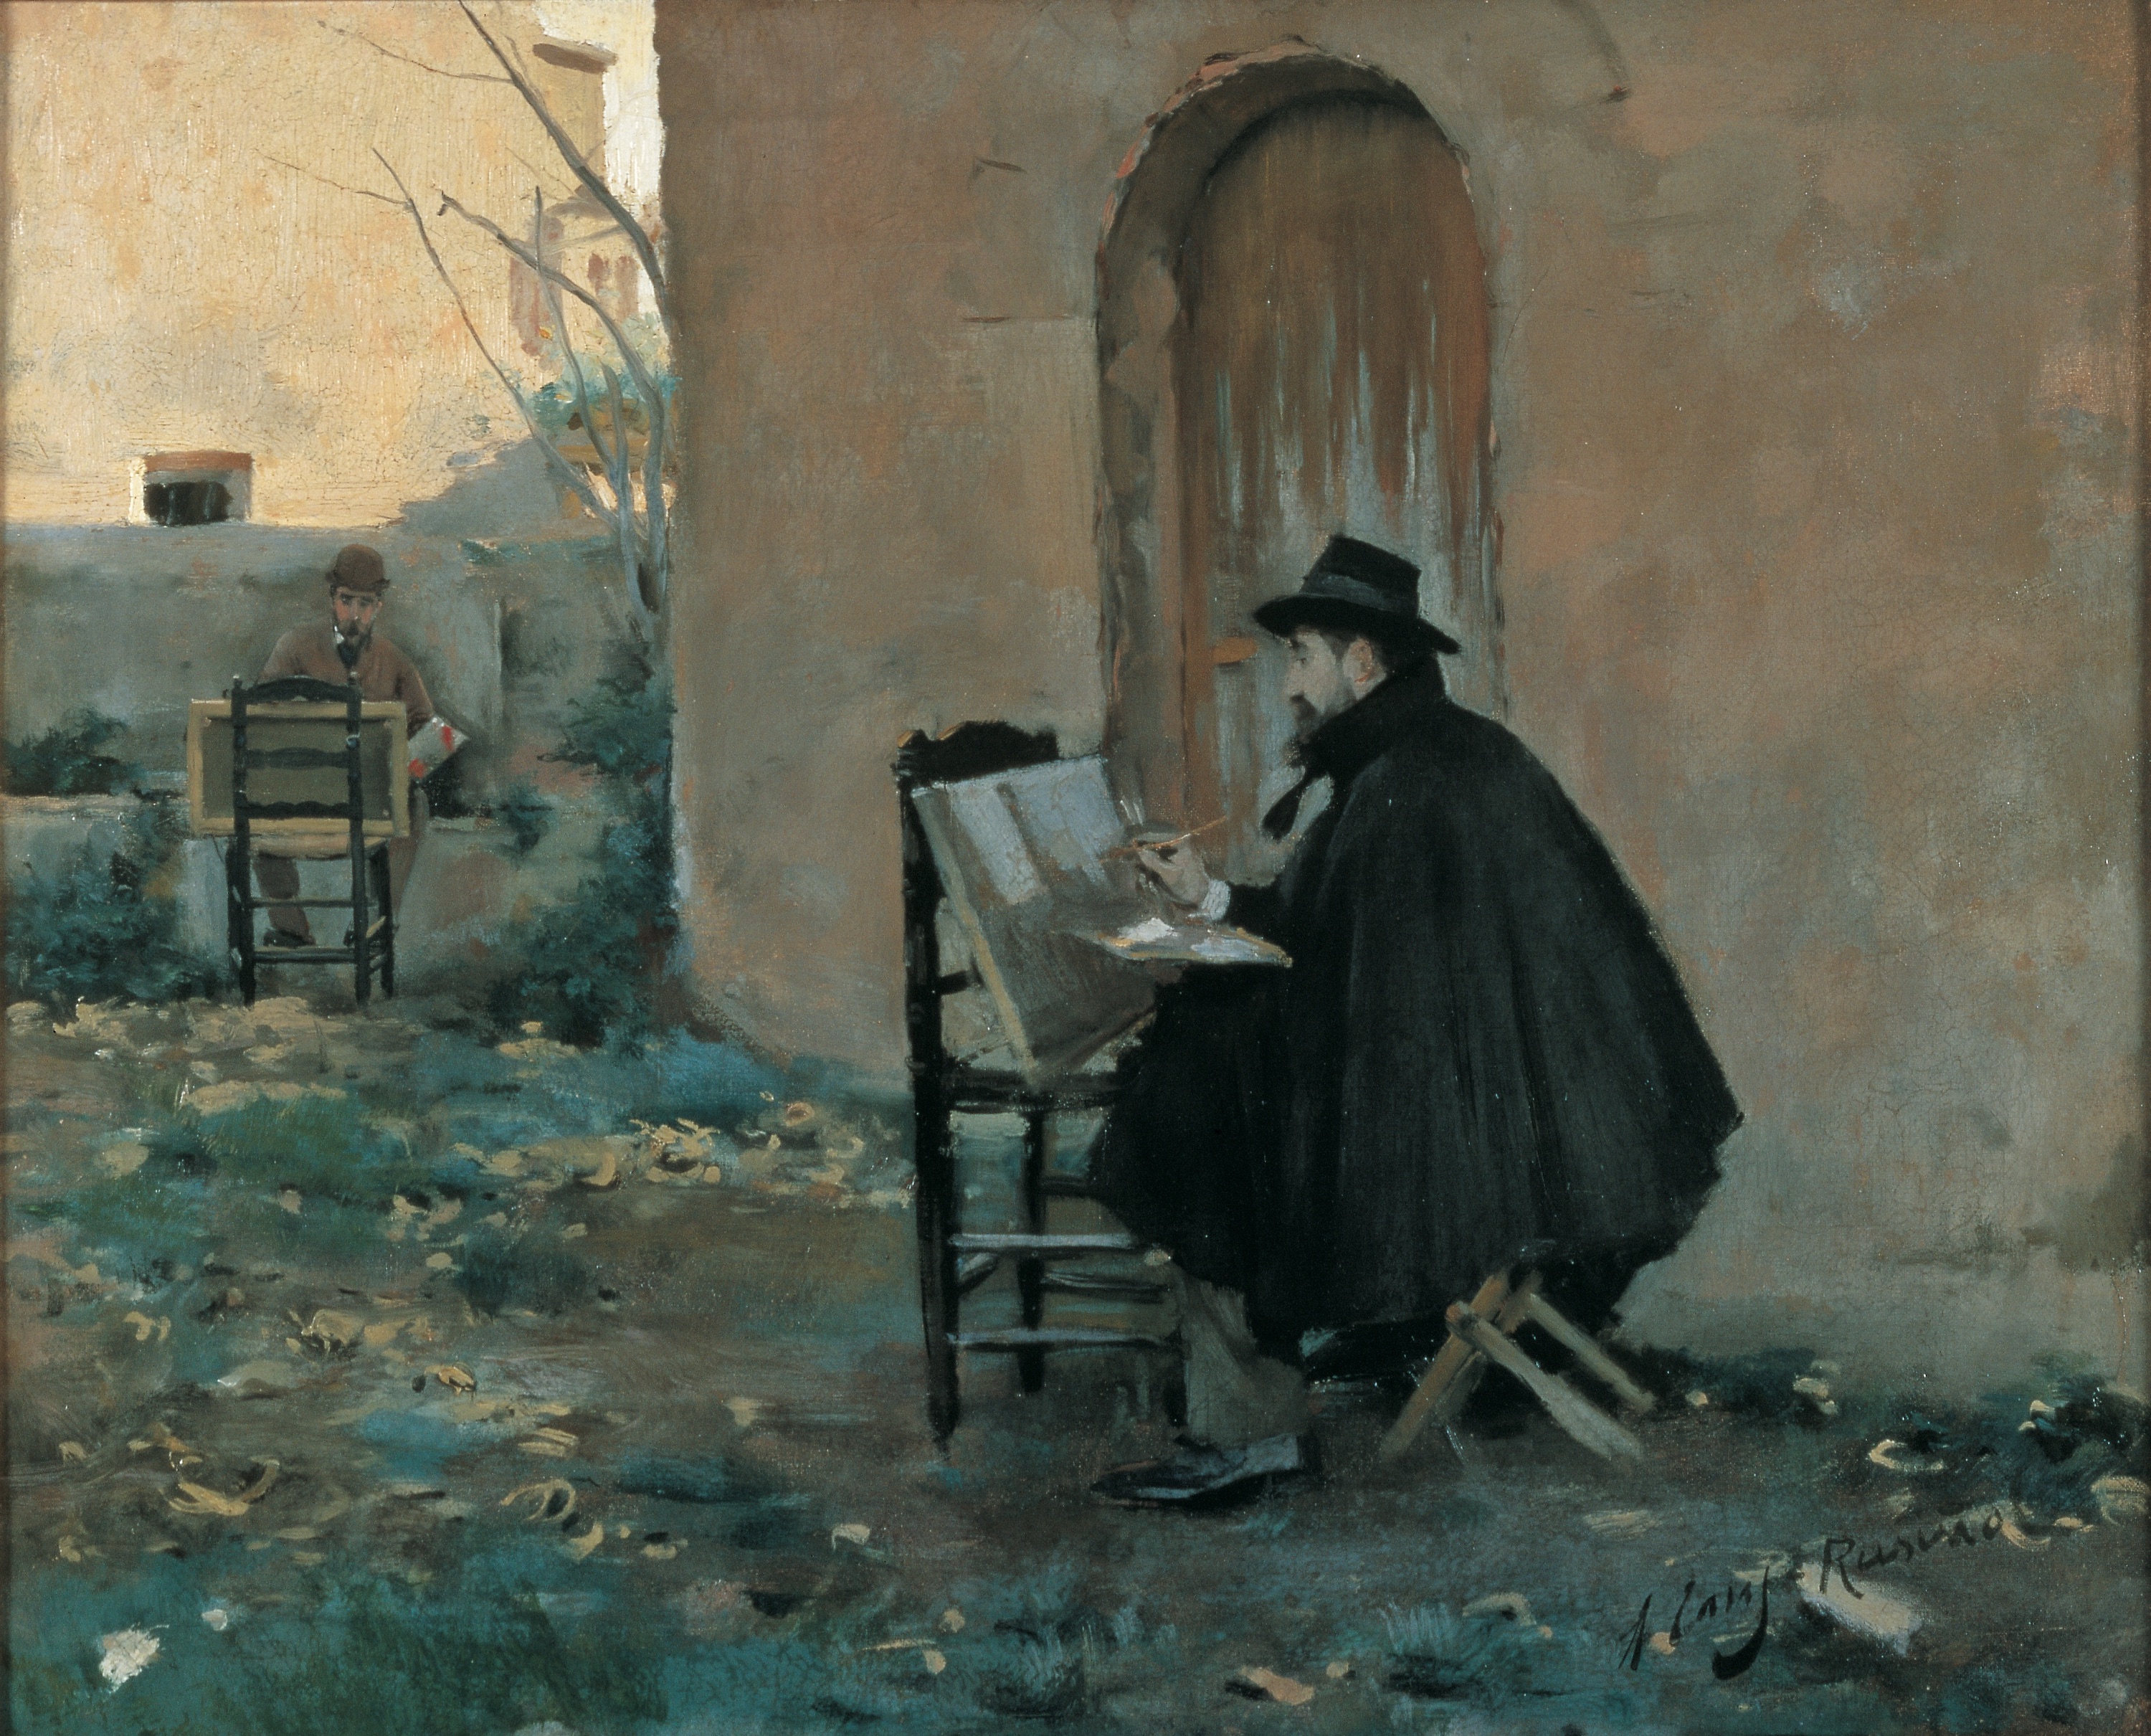 Painting Each Other by Santiago Rusinol and Ramon Casas - 1890 - 60 x 73 cm Museu del Cau Ferrat